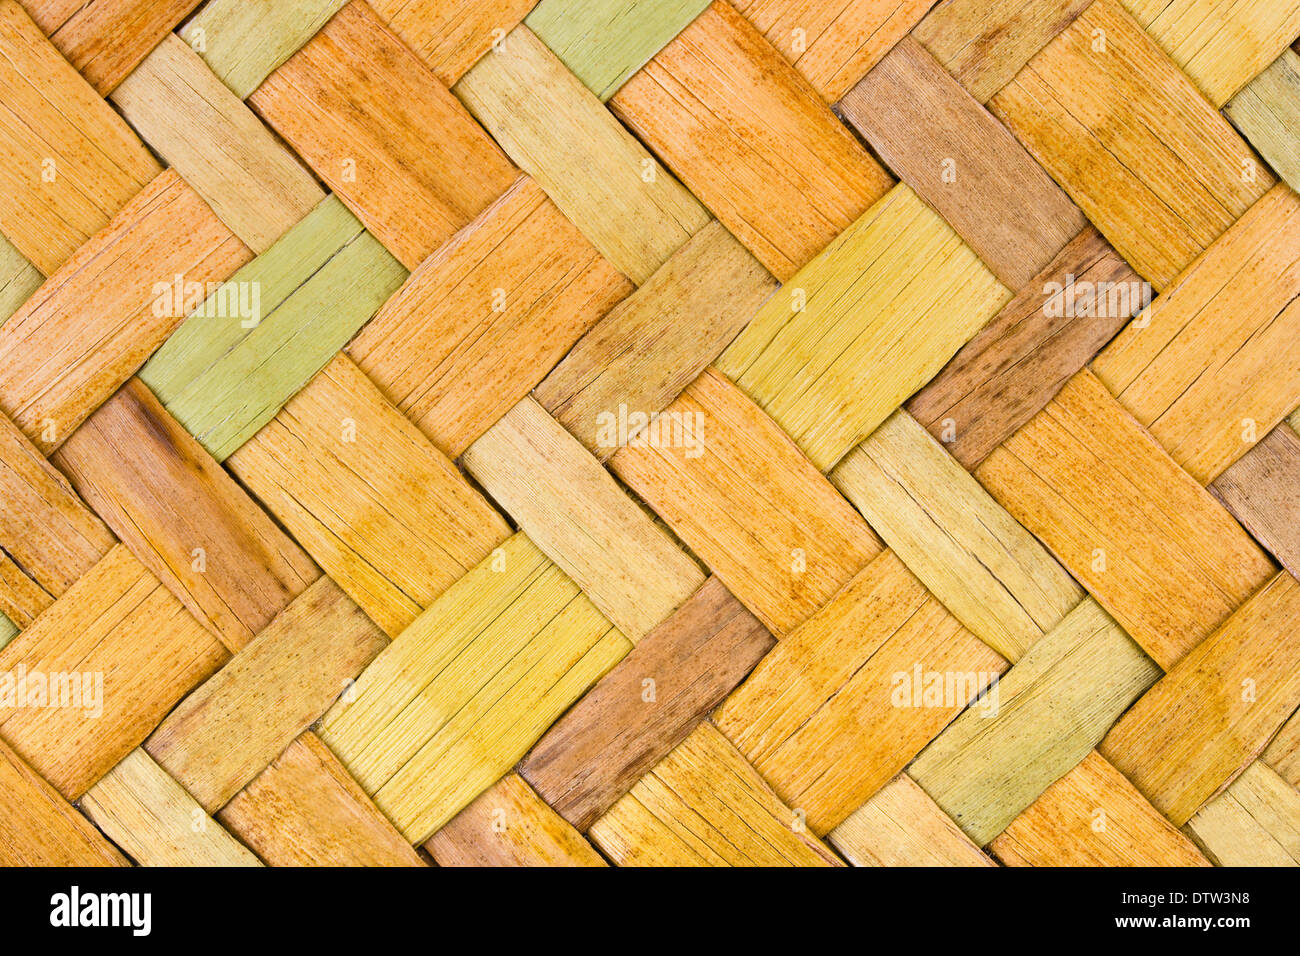 Wicker wood background Stock Photo